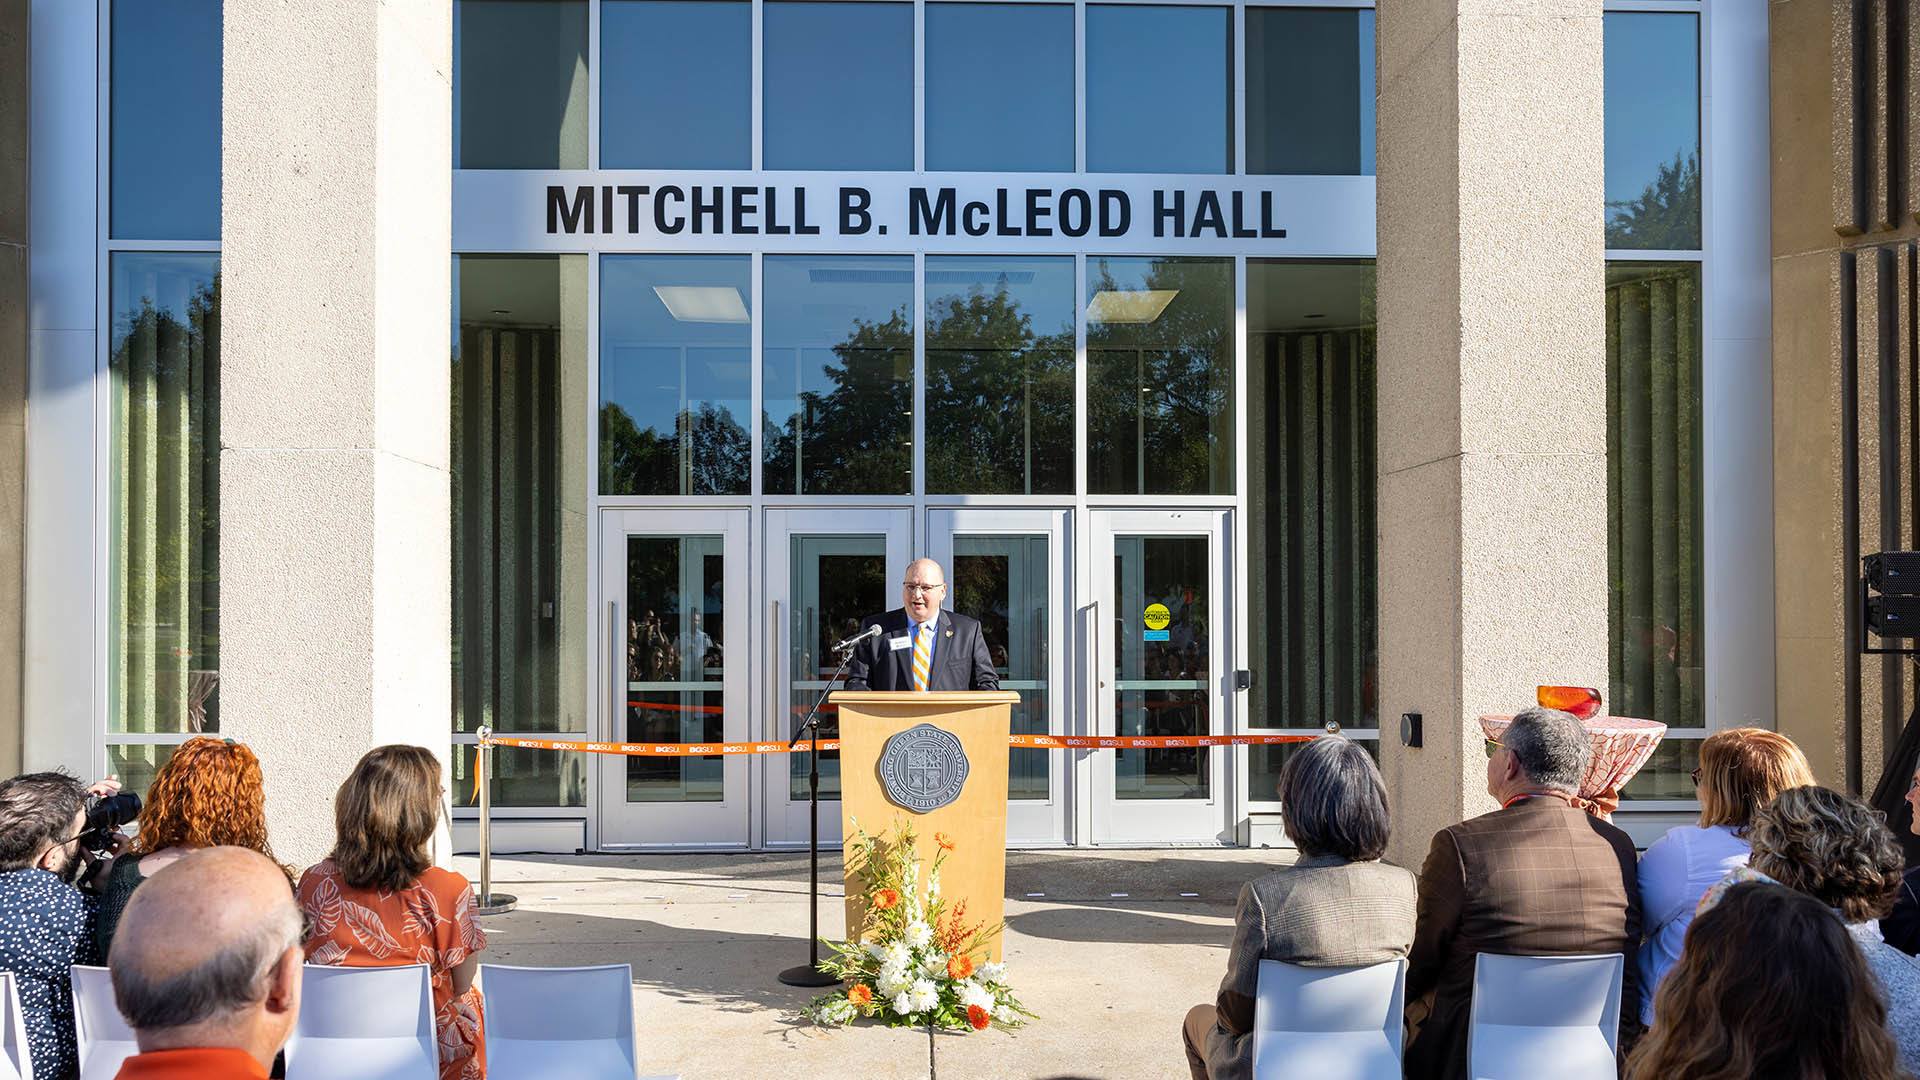 BGSU alumnus Mitchell B. McLeod speaks at the podium outside the renamed Mitchell B. McLeod Hall